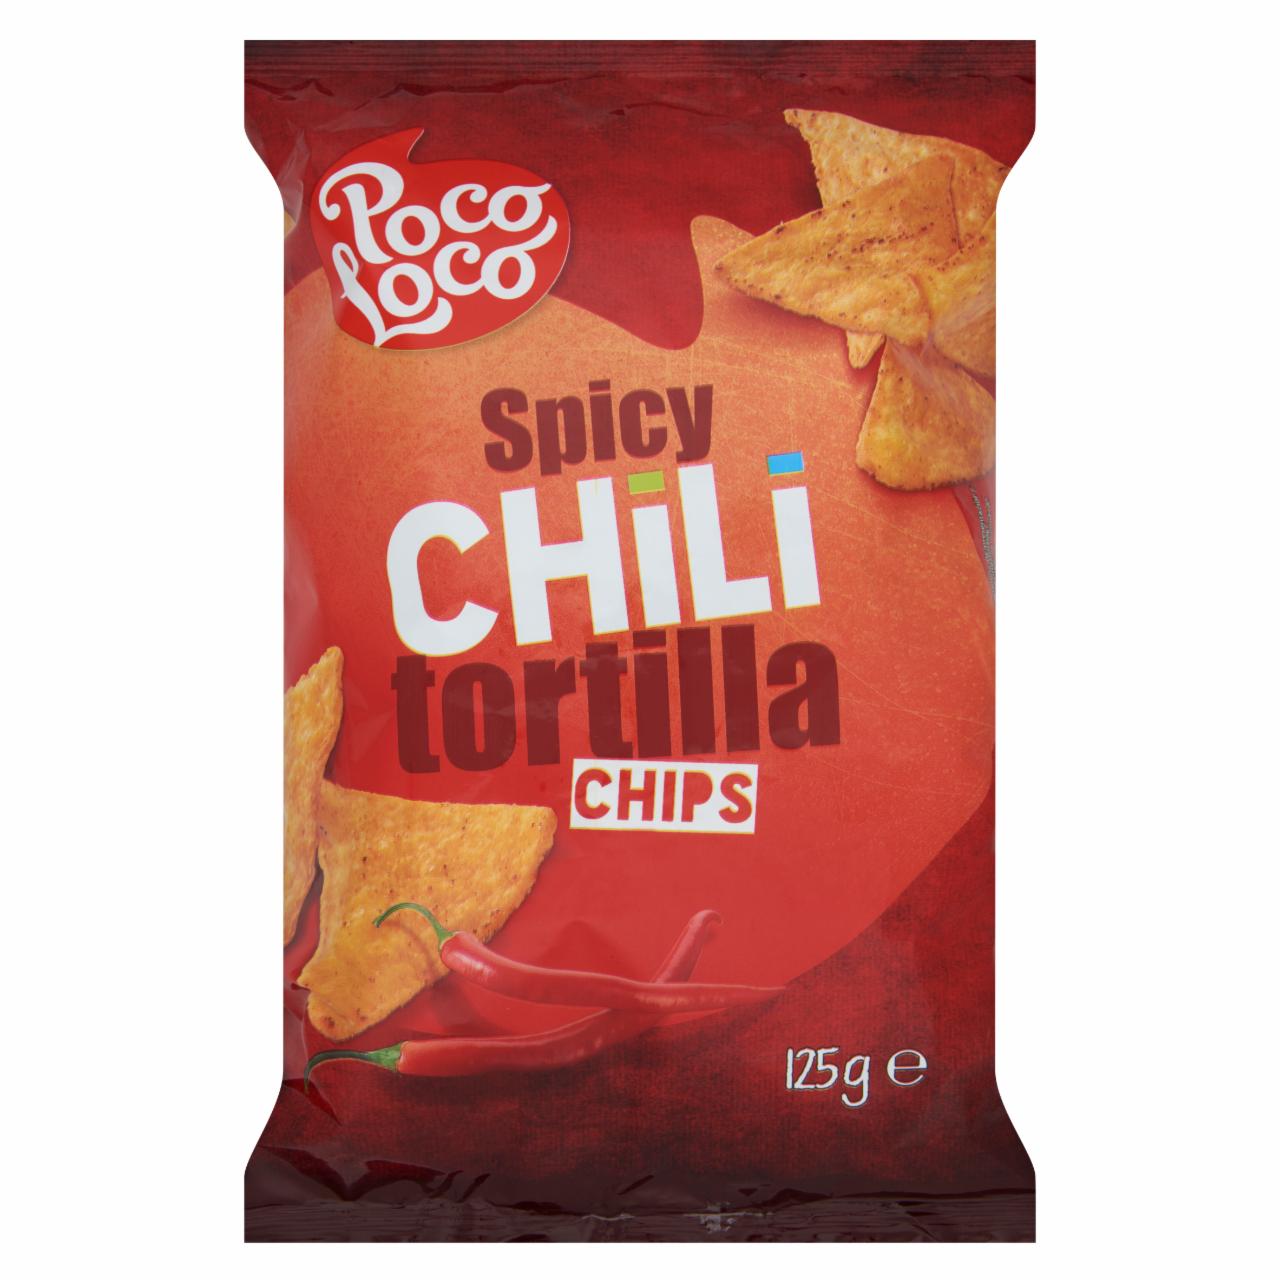 Képek - Poco Loco chili ízesítésű kukoricachips 125 g